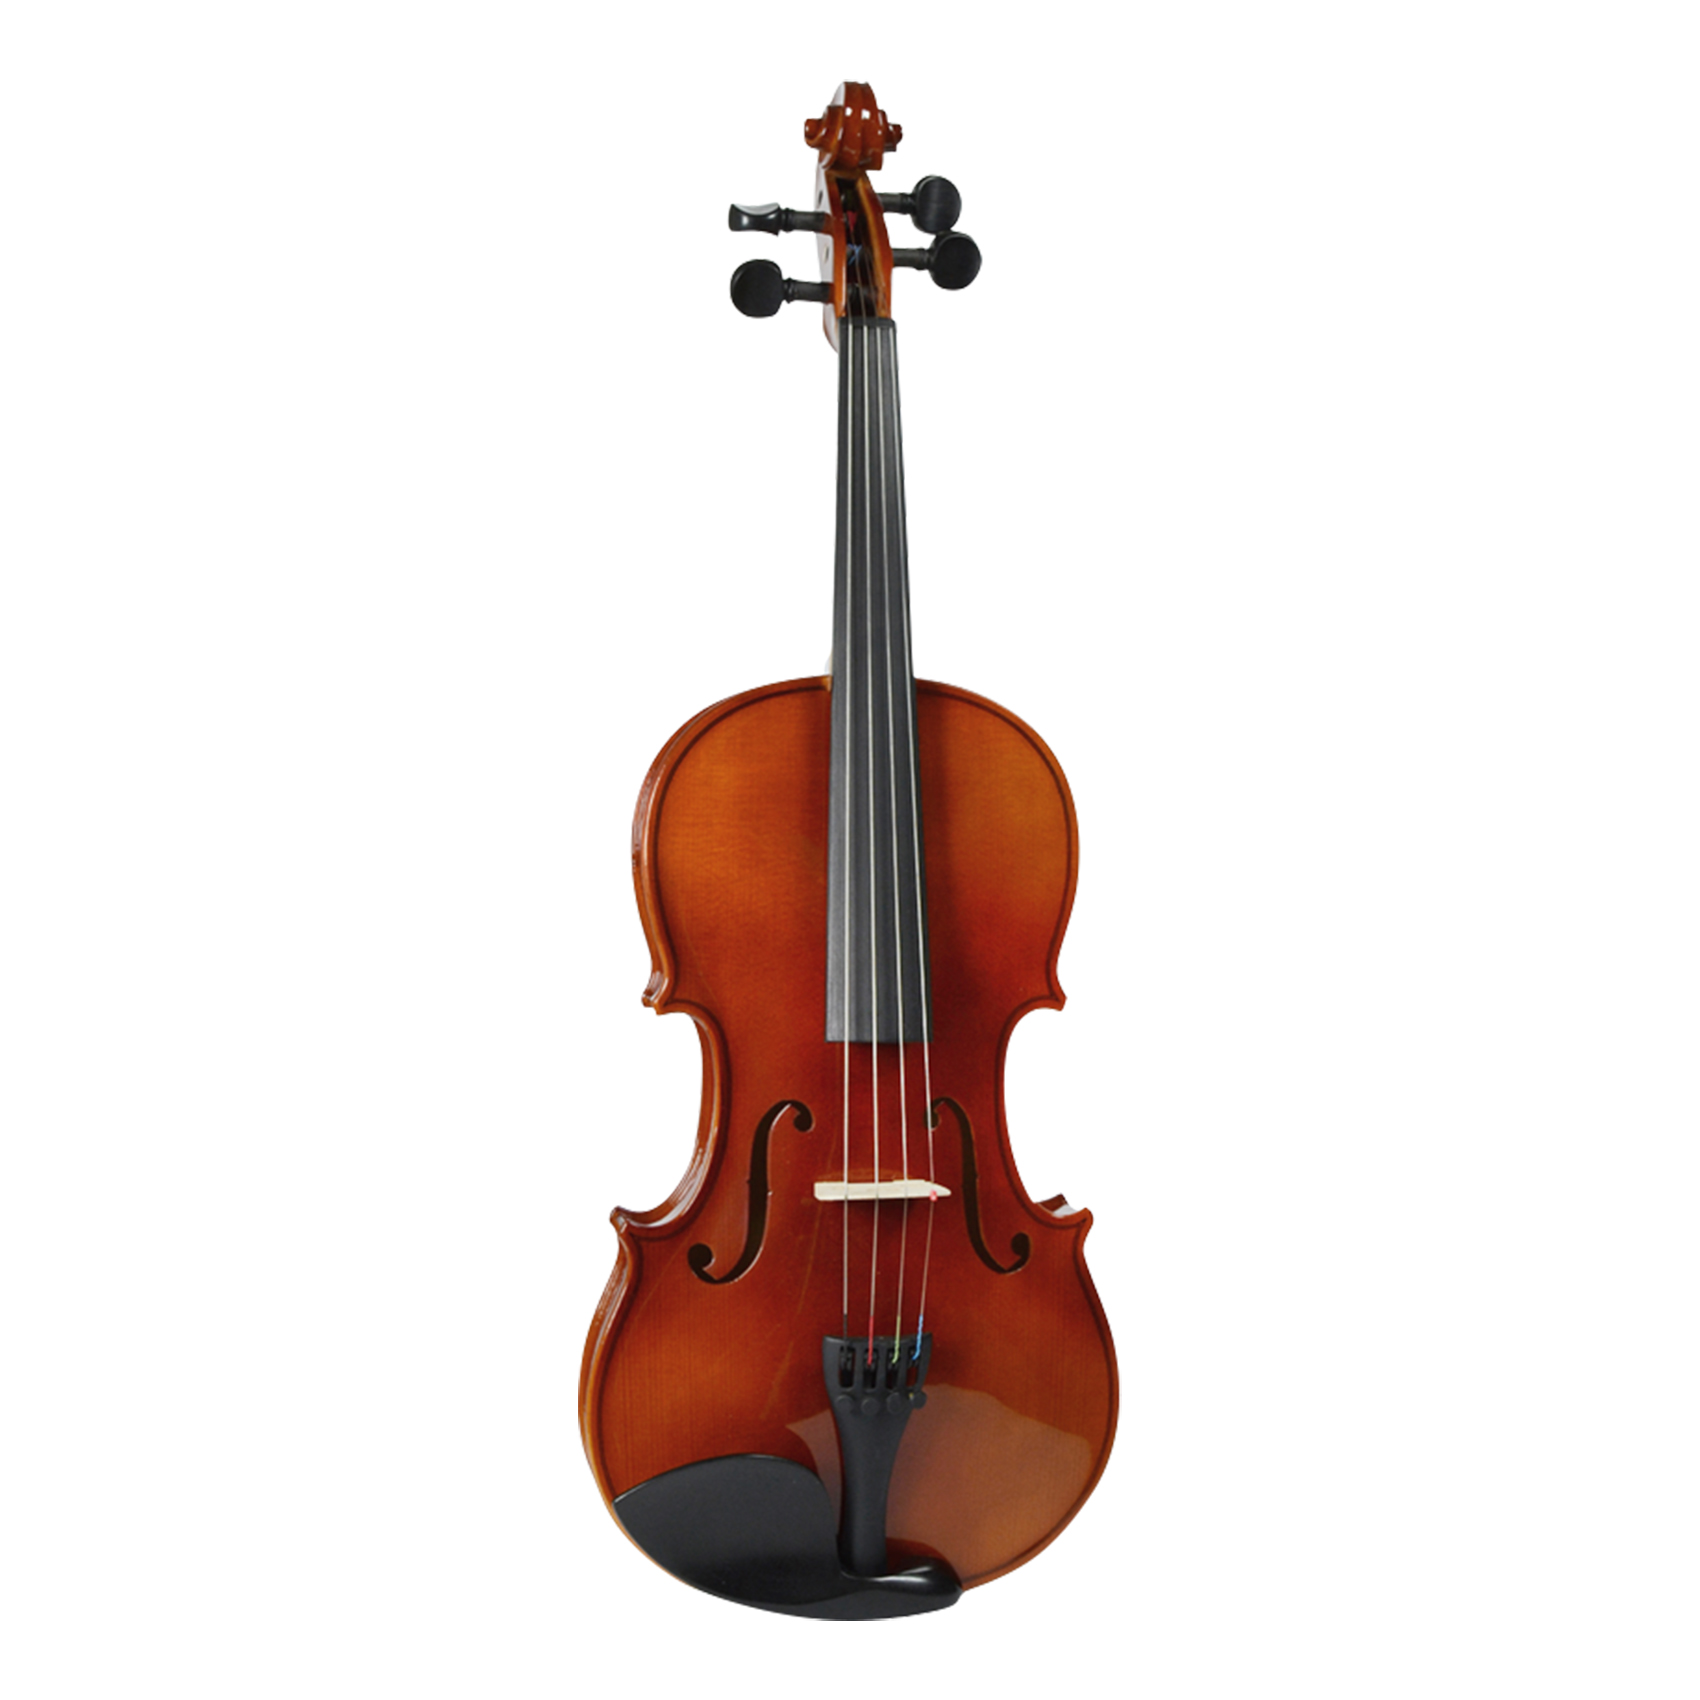  /  STRUNAL 150 4/4 Stradivarius